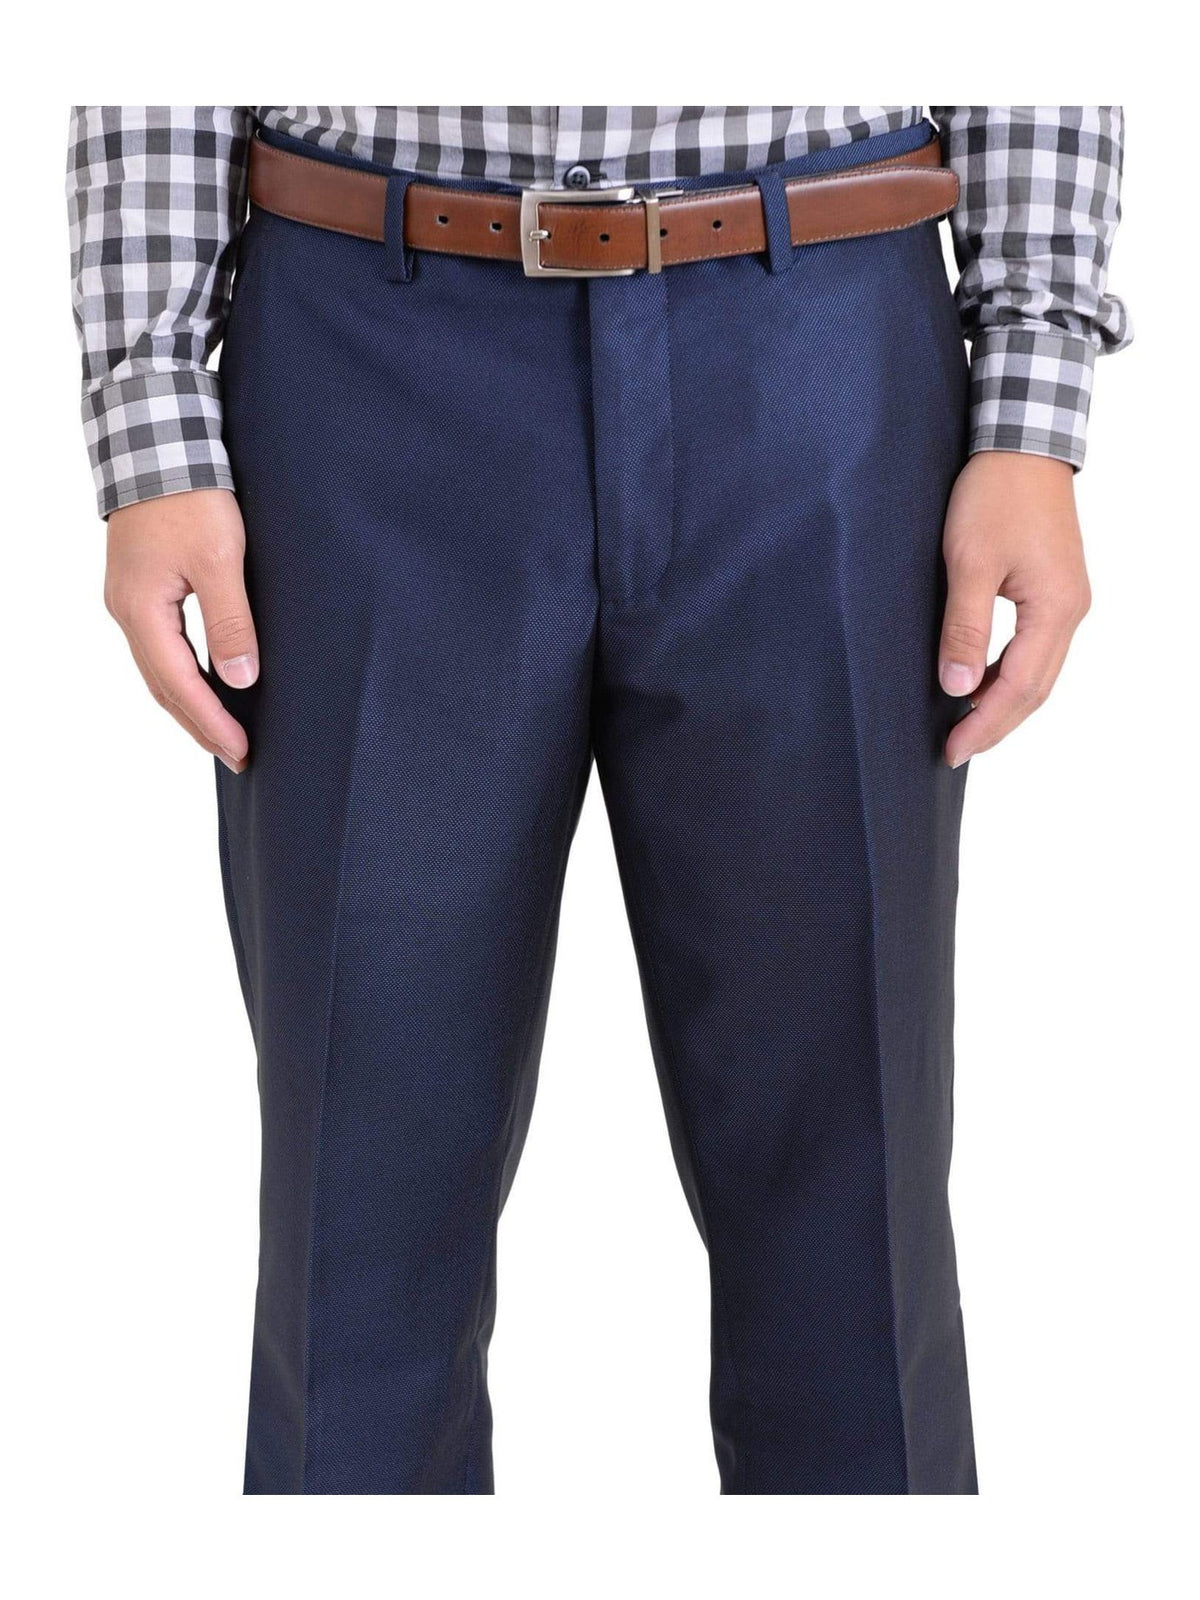 Ideal Sale Pants Ideal Slim Fit Navy Blue Pindot With Subtle Sheen Flat Front Wool Dress Pants